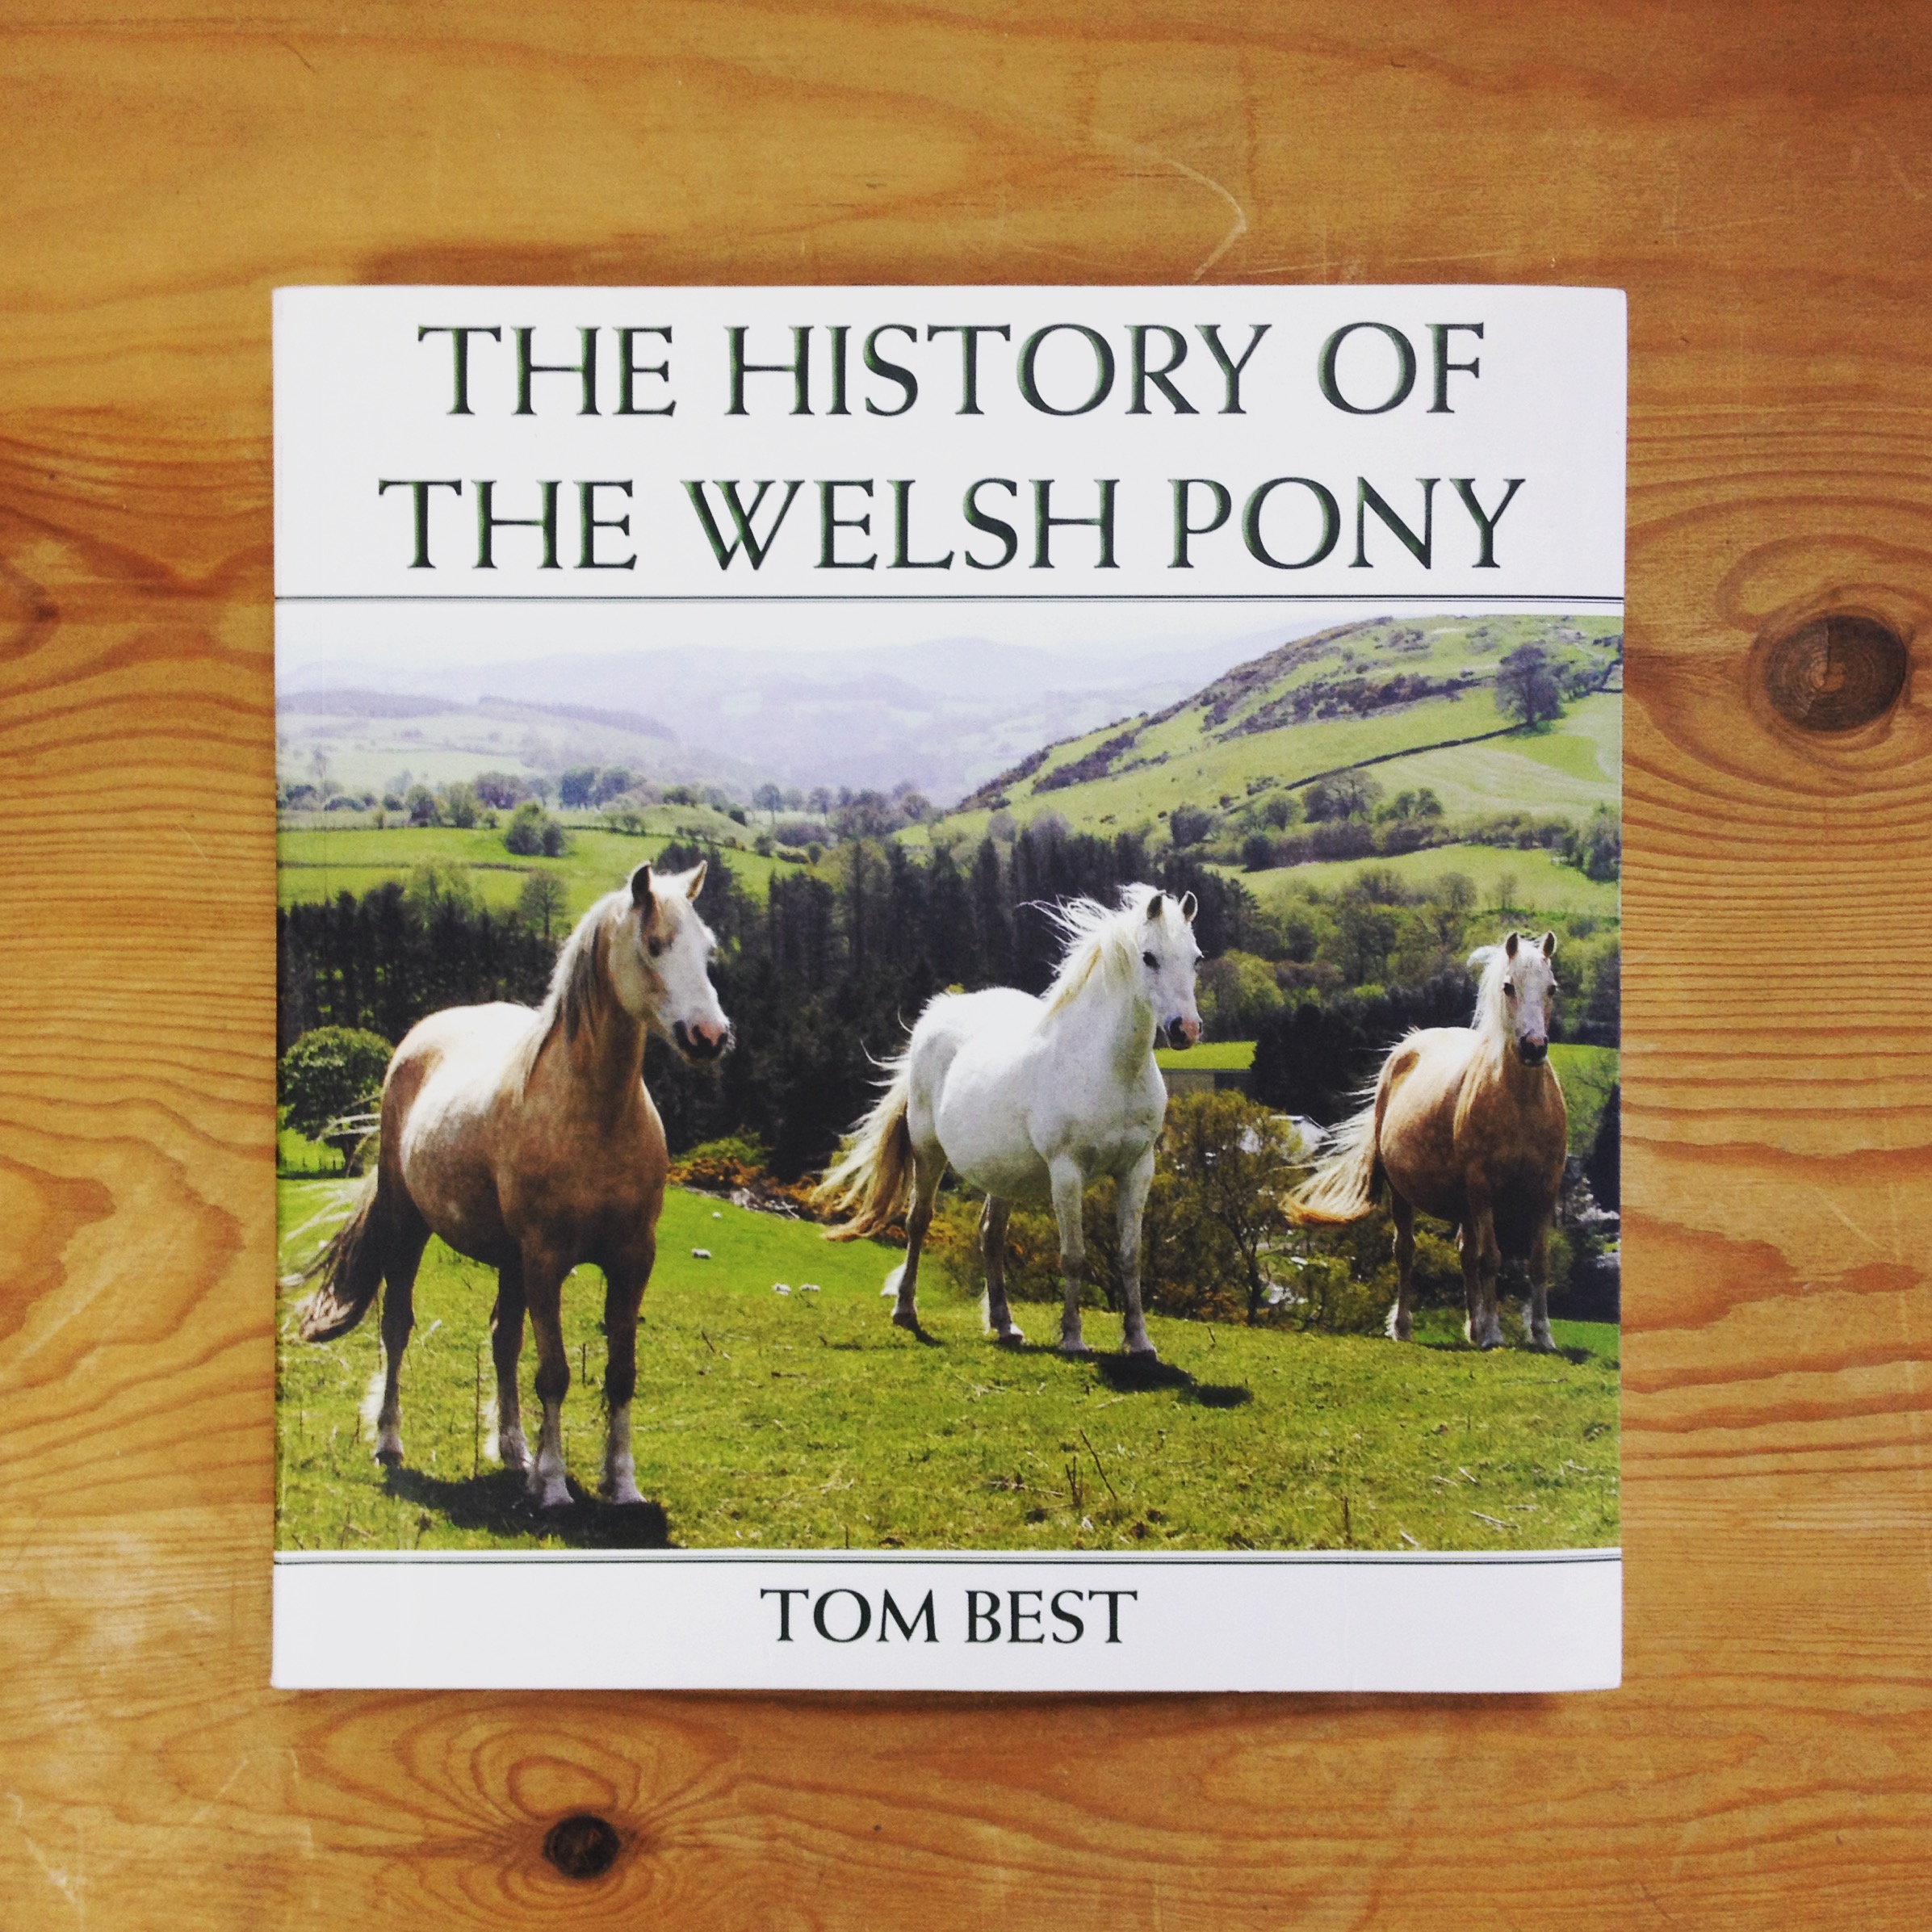 Celebrating the National Welsh Pony Show